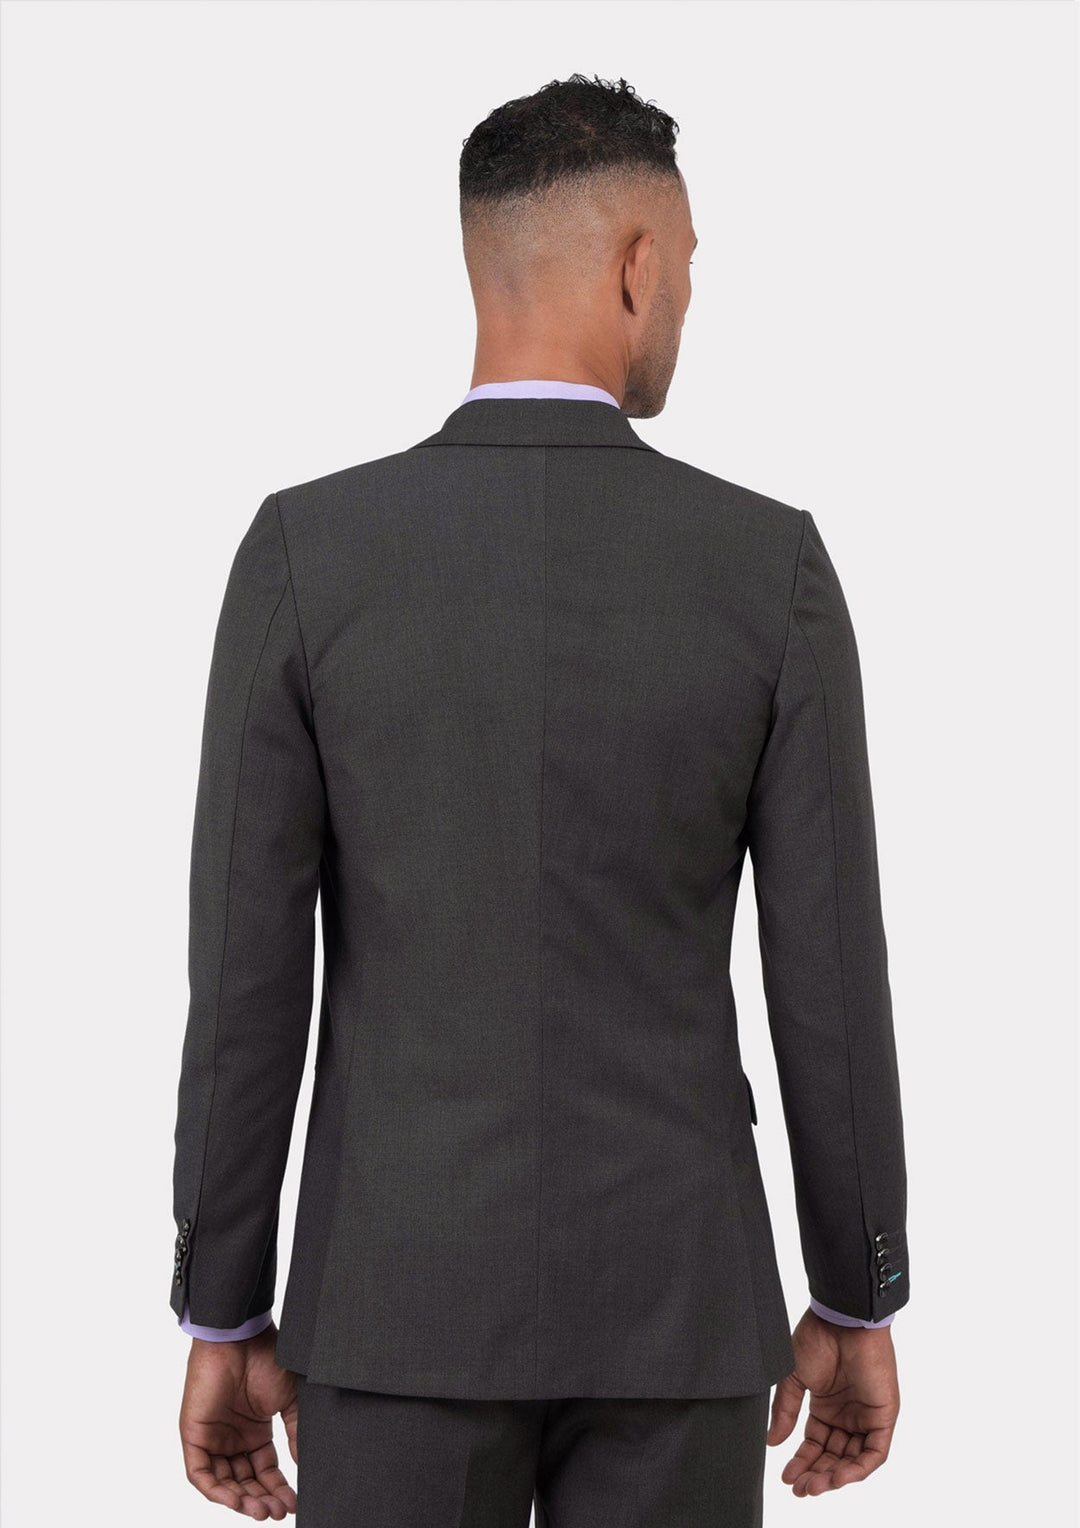 Bryant Charcoal Crosshatch Suit - SARTORO